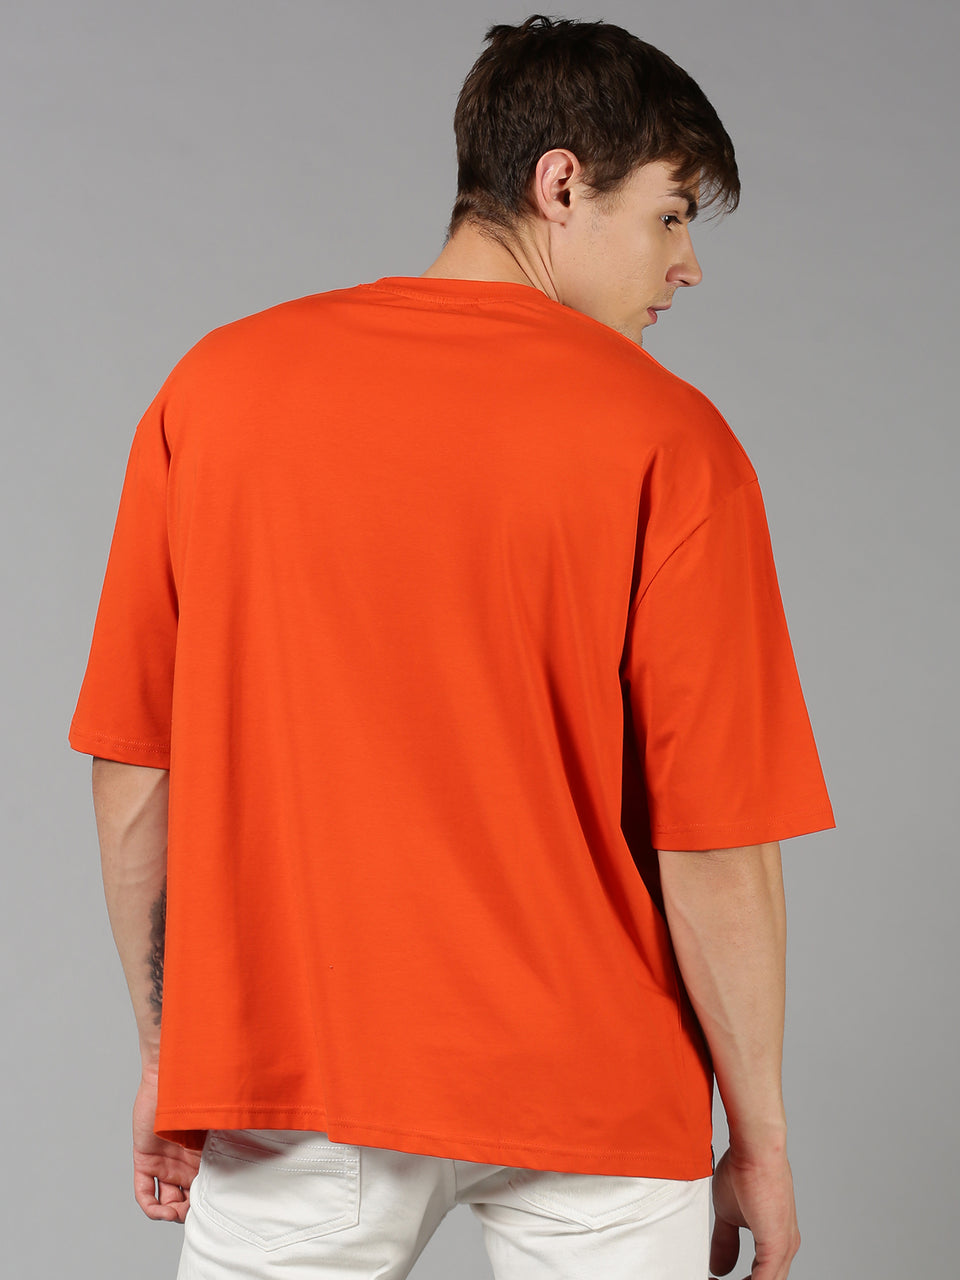 Buy mens plain orange oversized t-shirts online india - urgear – UrGear